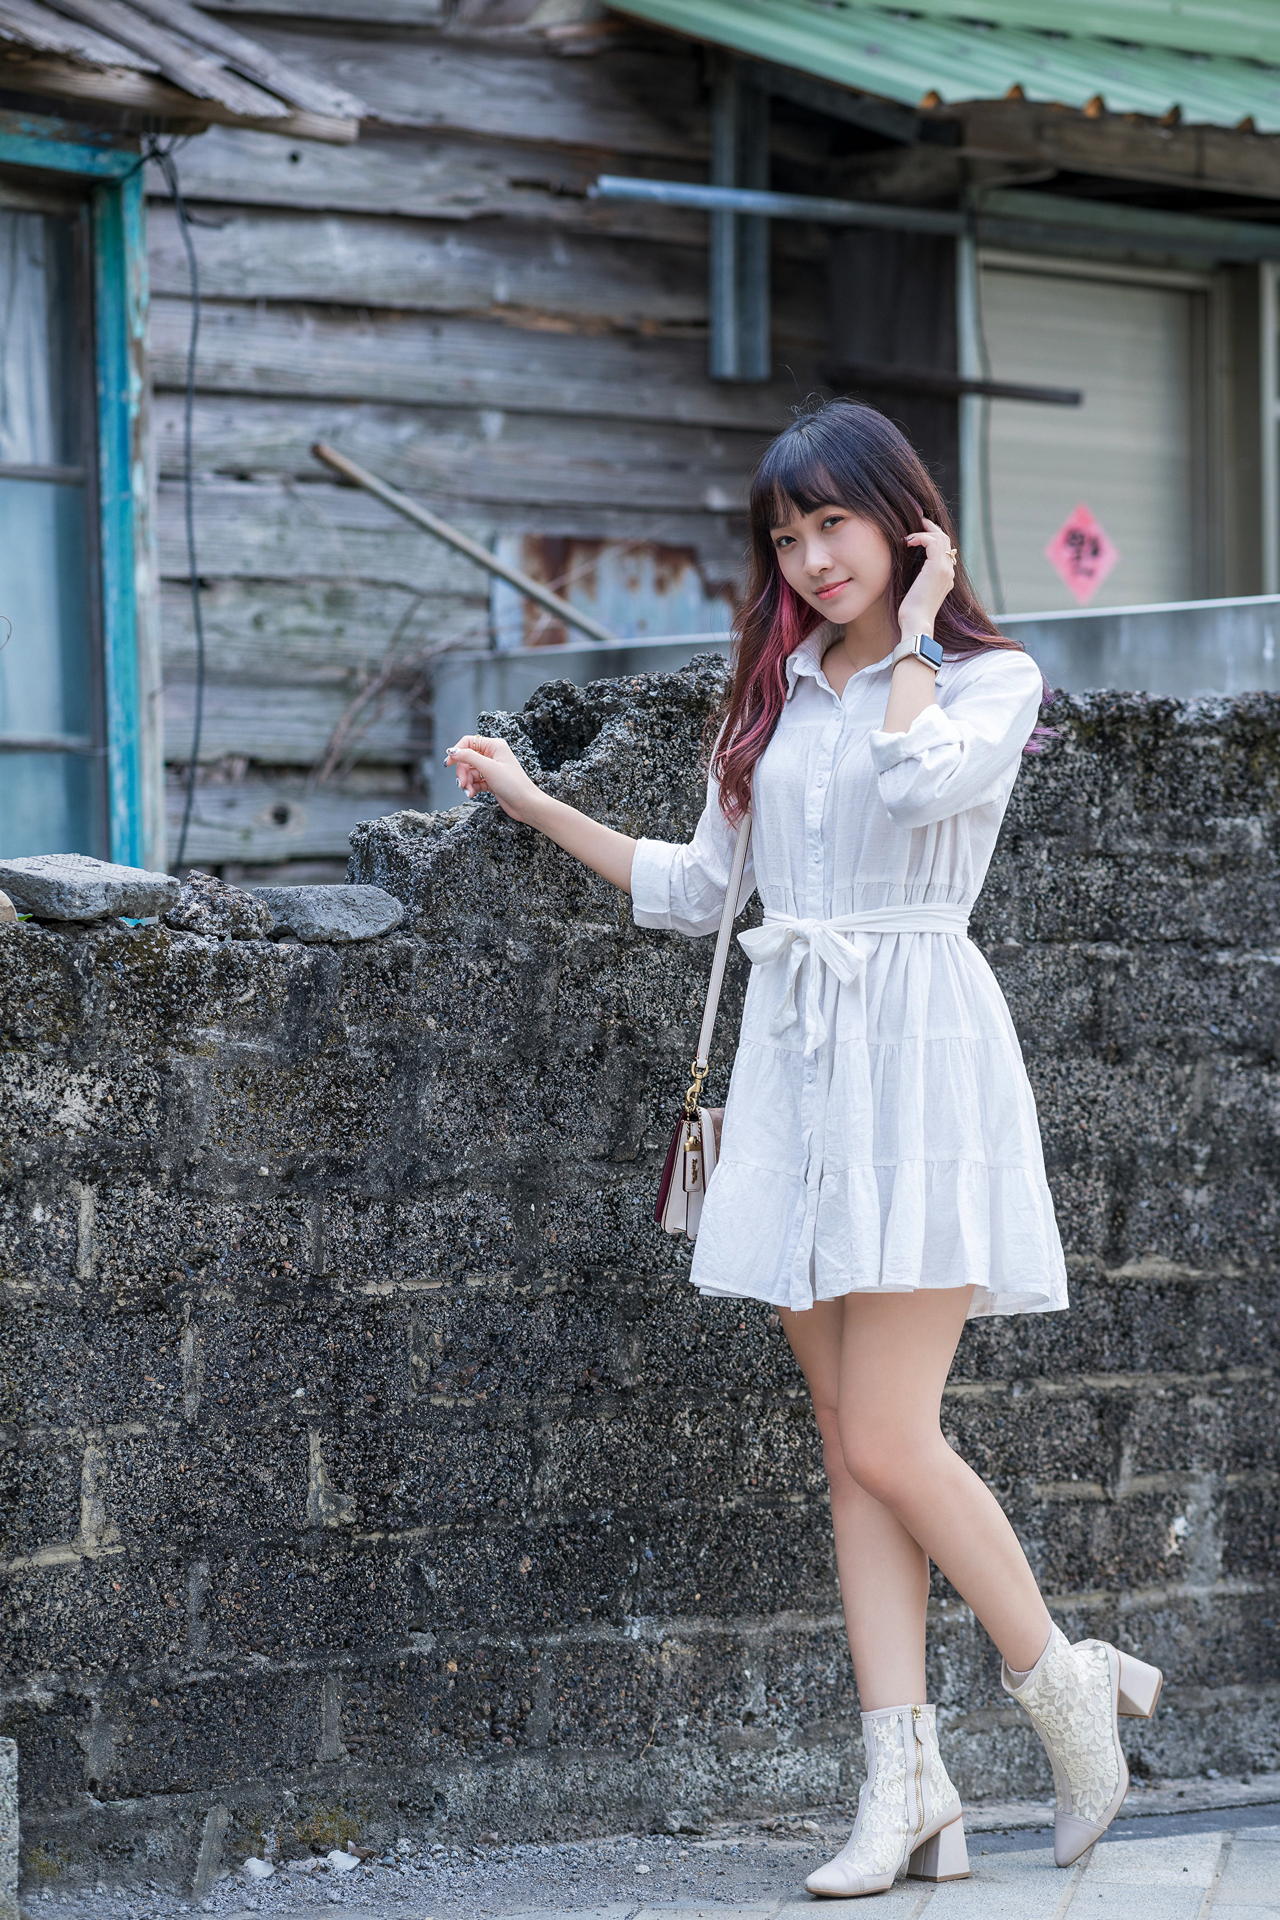 Asian Model Women Women Outdoors Long Hair Dark Hair White Dress Wristwatch Wall Leaning Dyed Hair D 1280x1920